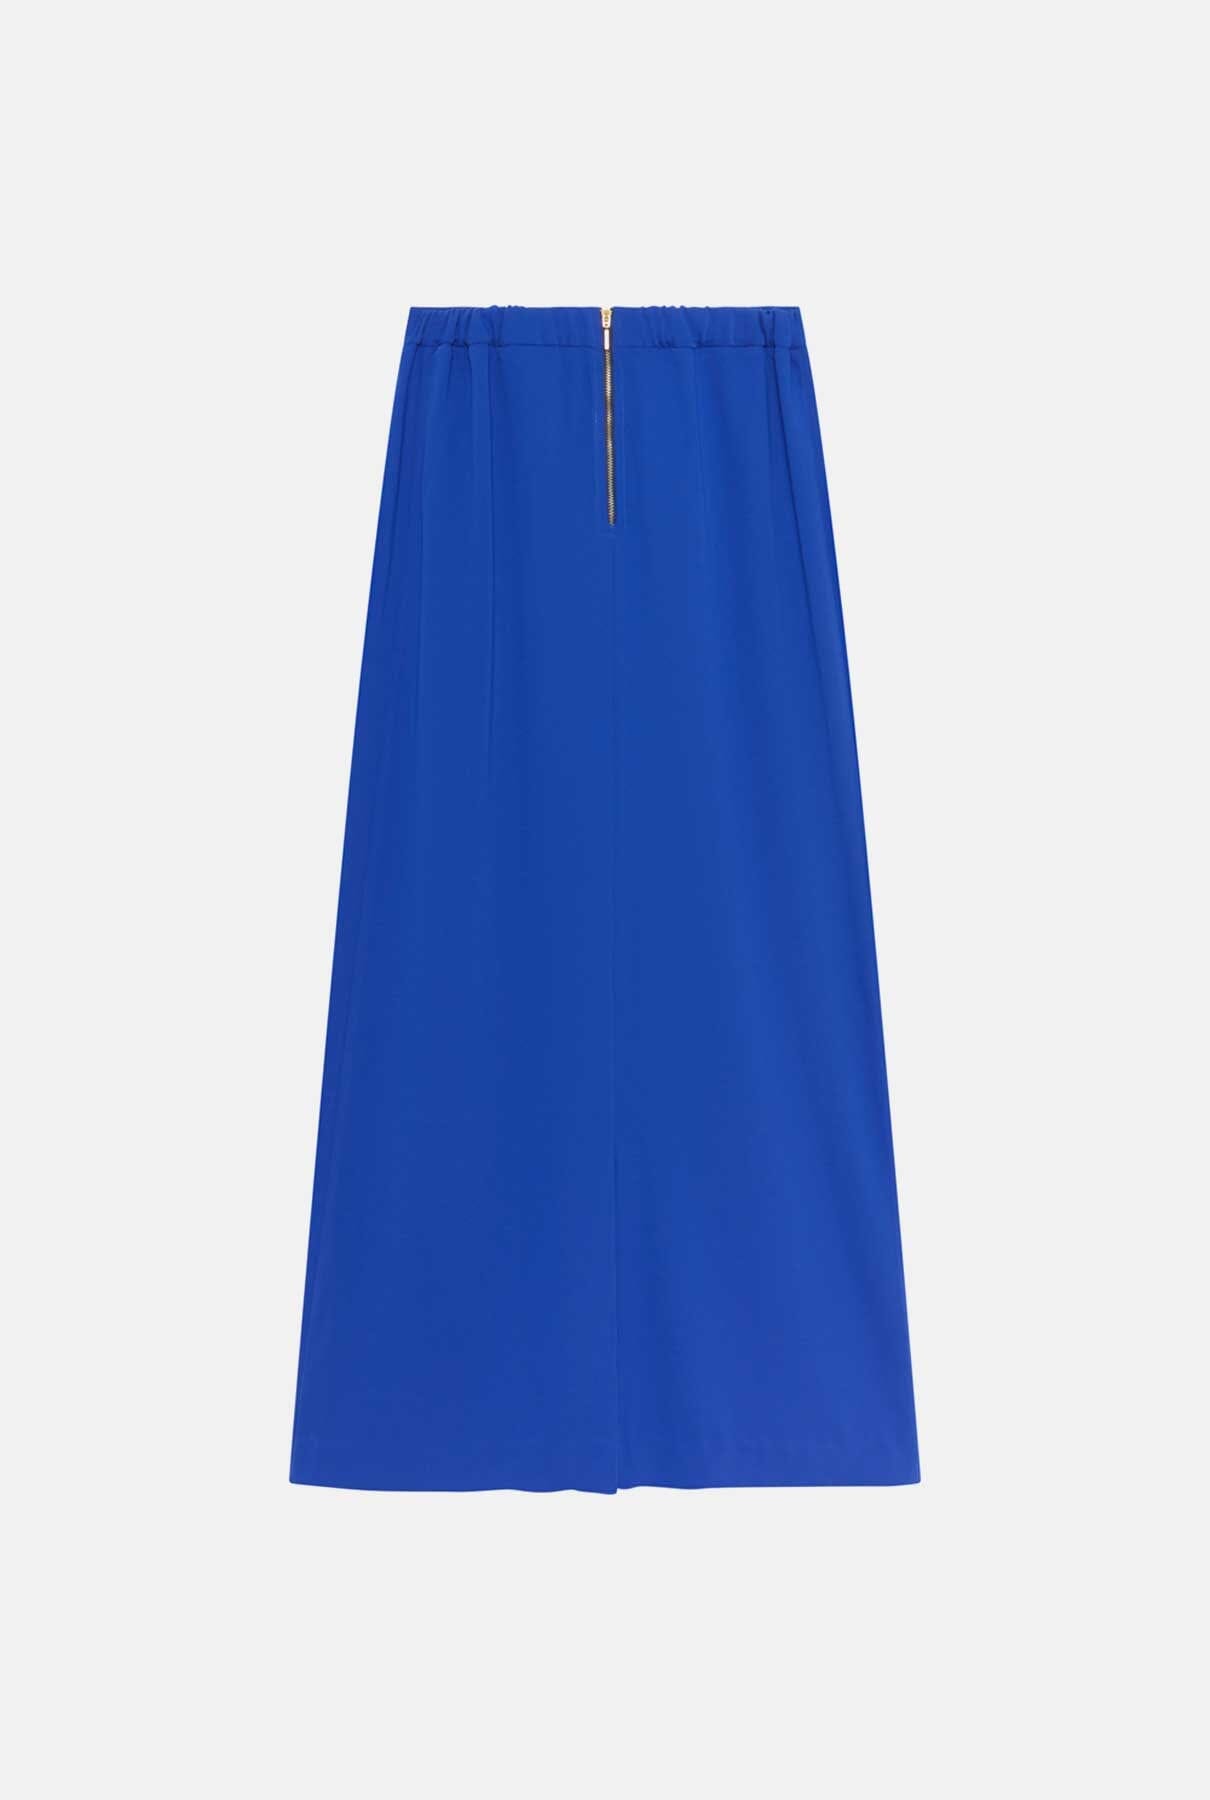 Concha Blue Skirts Julise Magon 